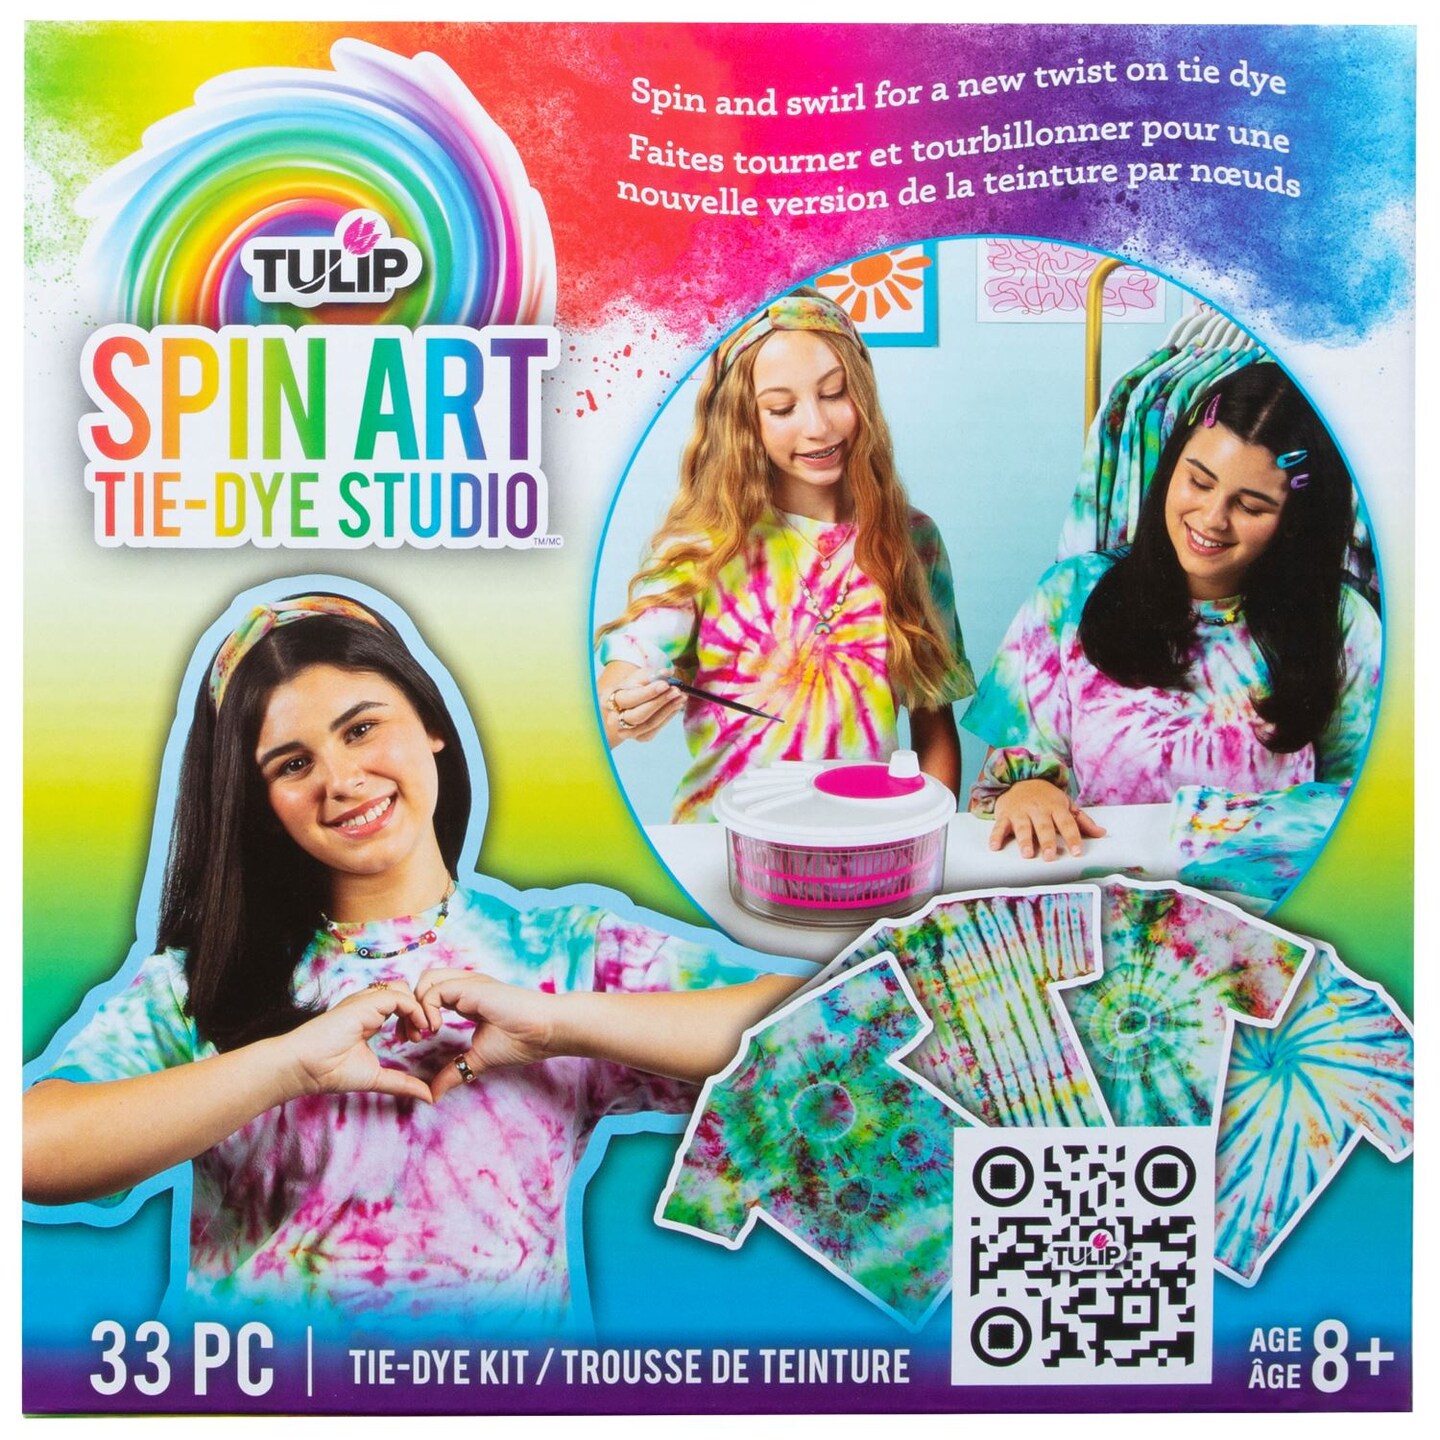 Tulip Spin Art Tie-Dye Studio